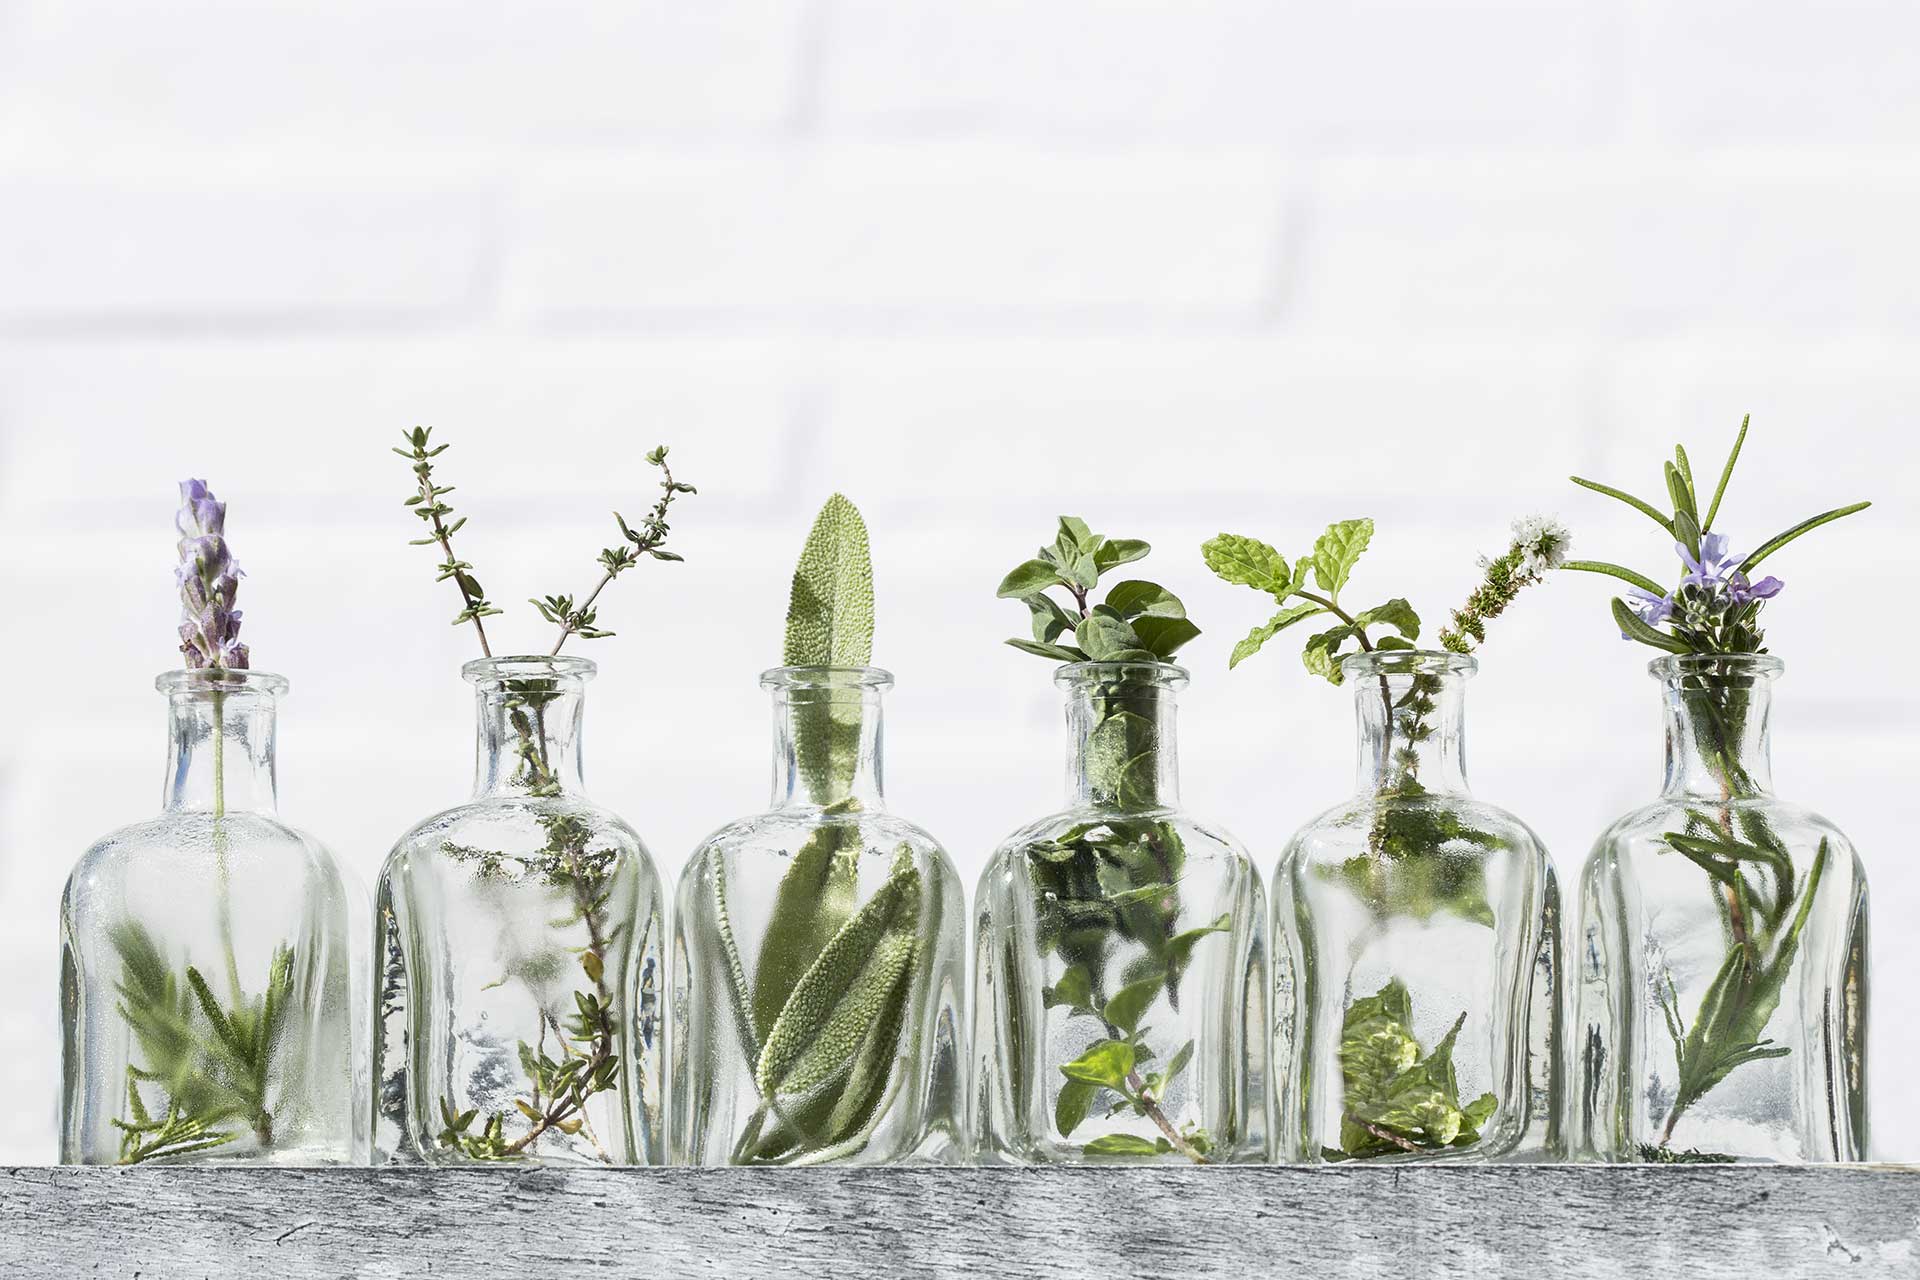 Herbs in glass jars